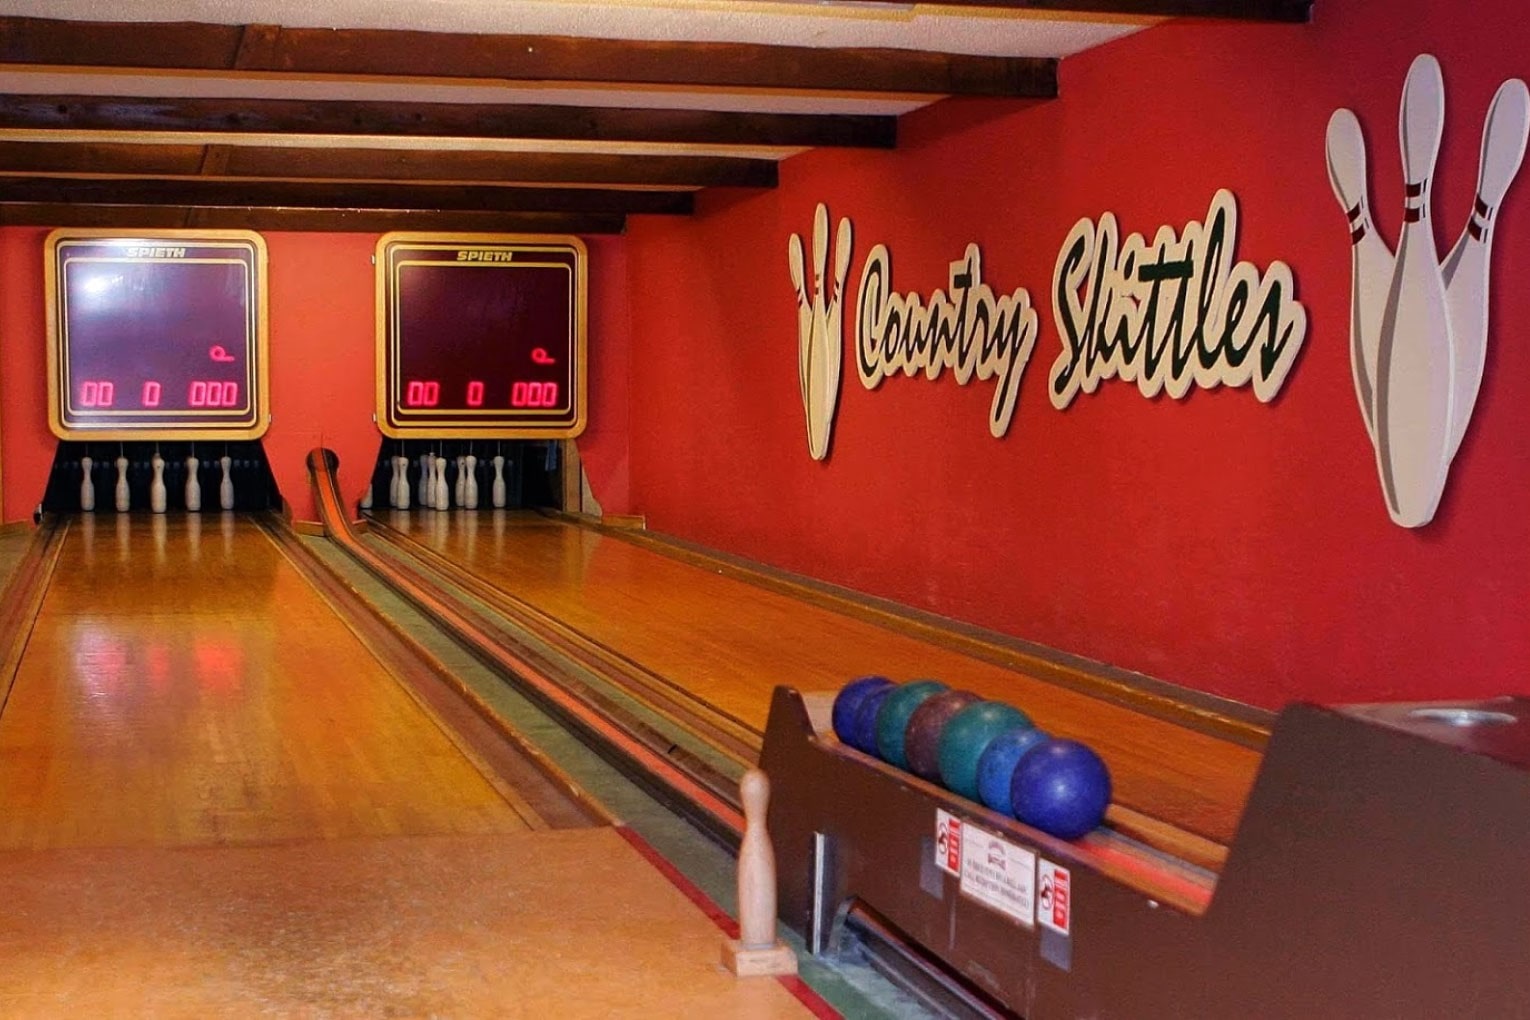 nine-pin-bowling-lane-at-country-skittles-indoor-activities-cornwall